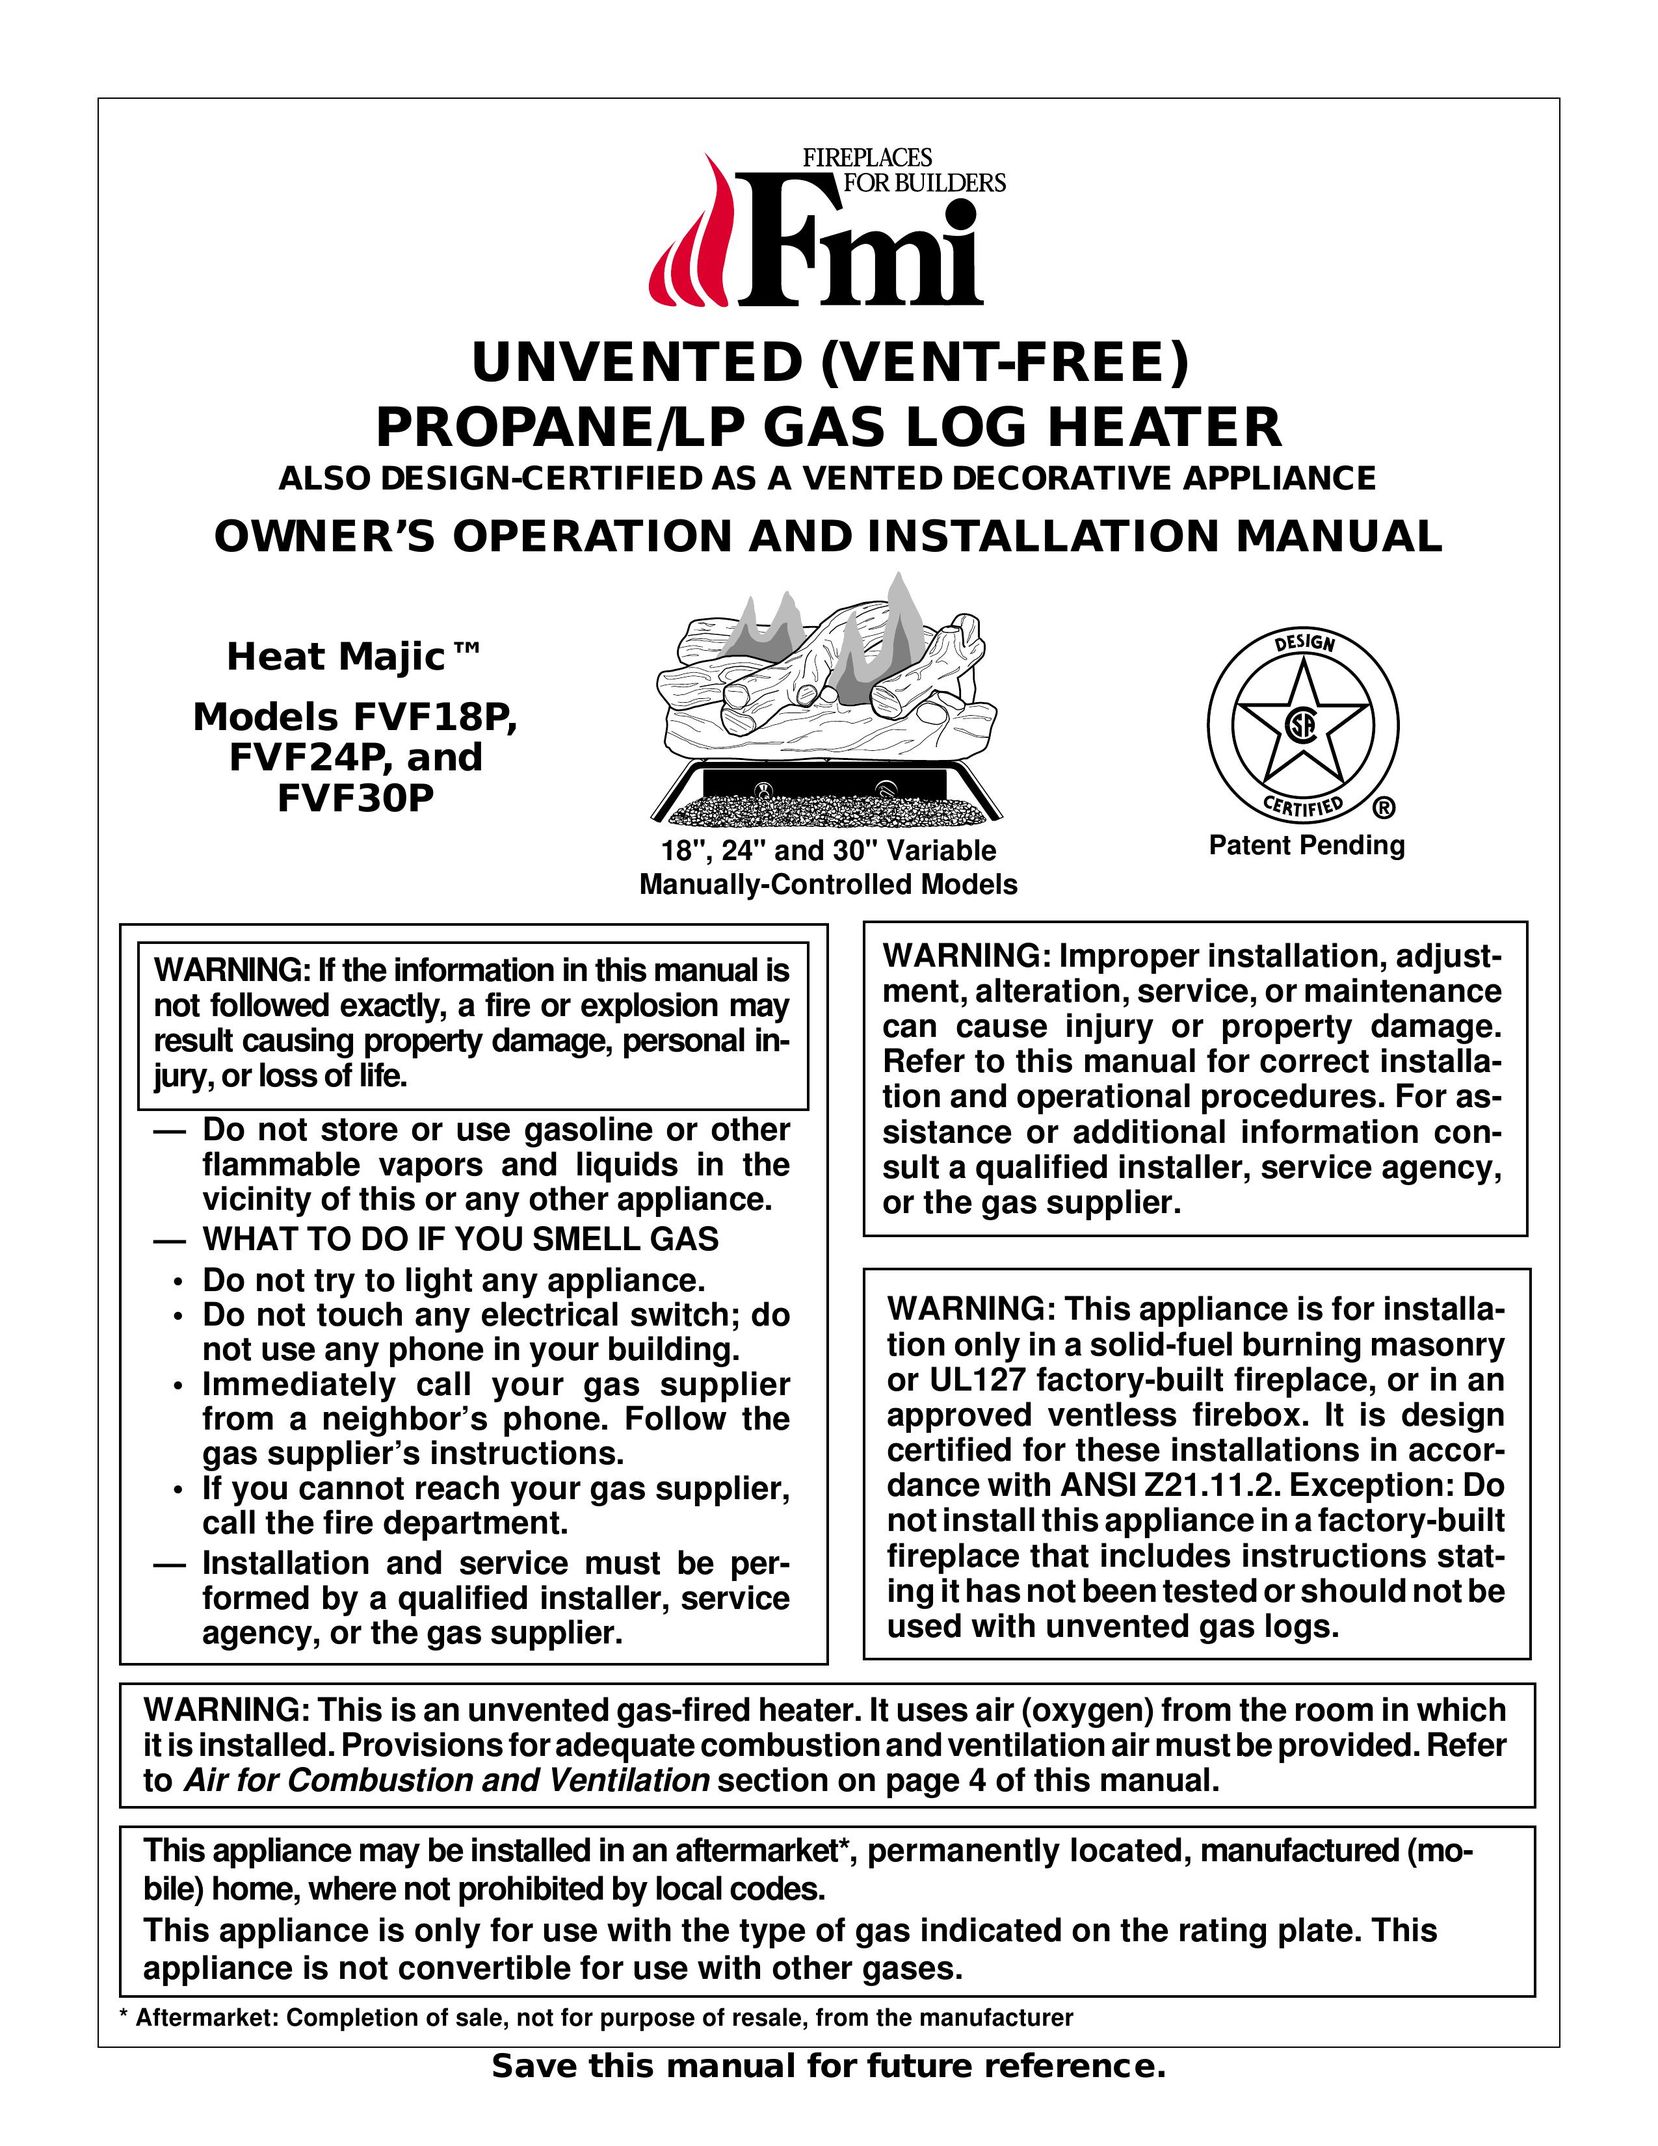 FMI FVF24P Gas Heater User Manual